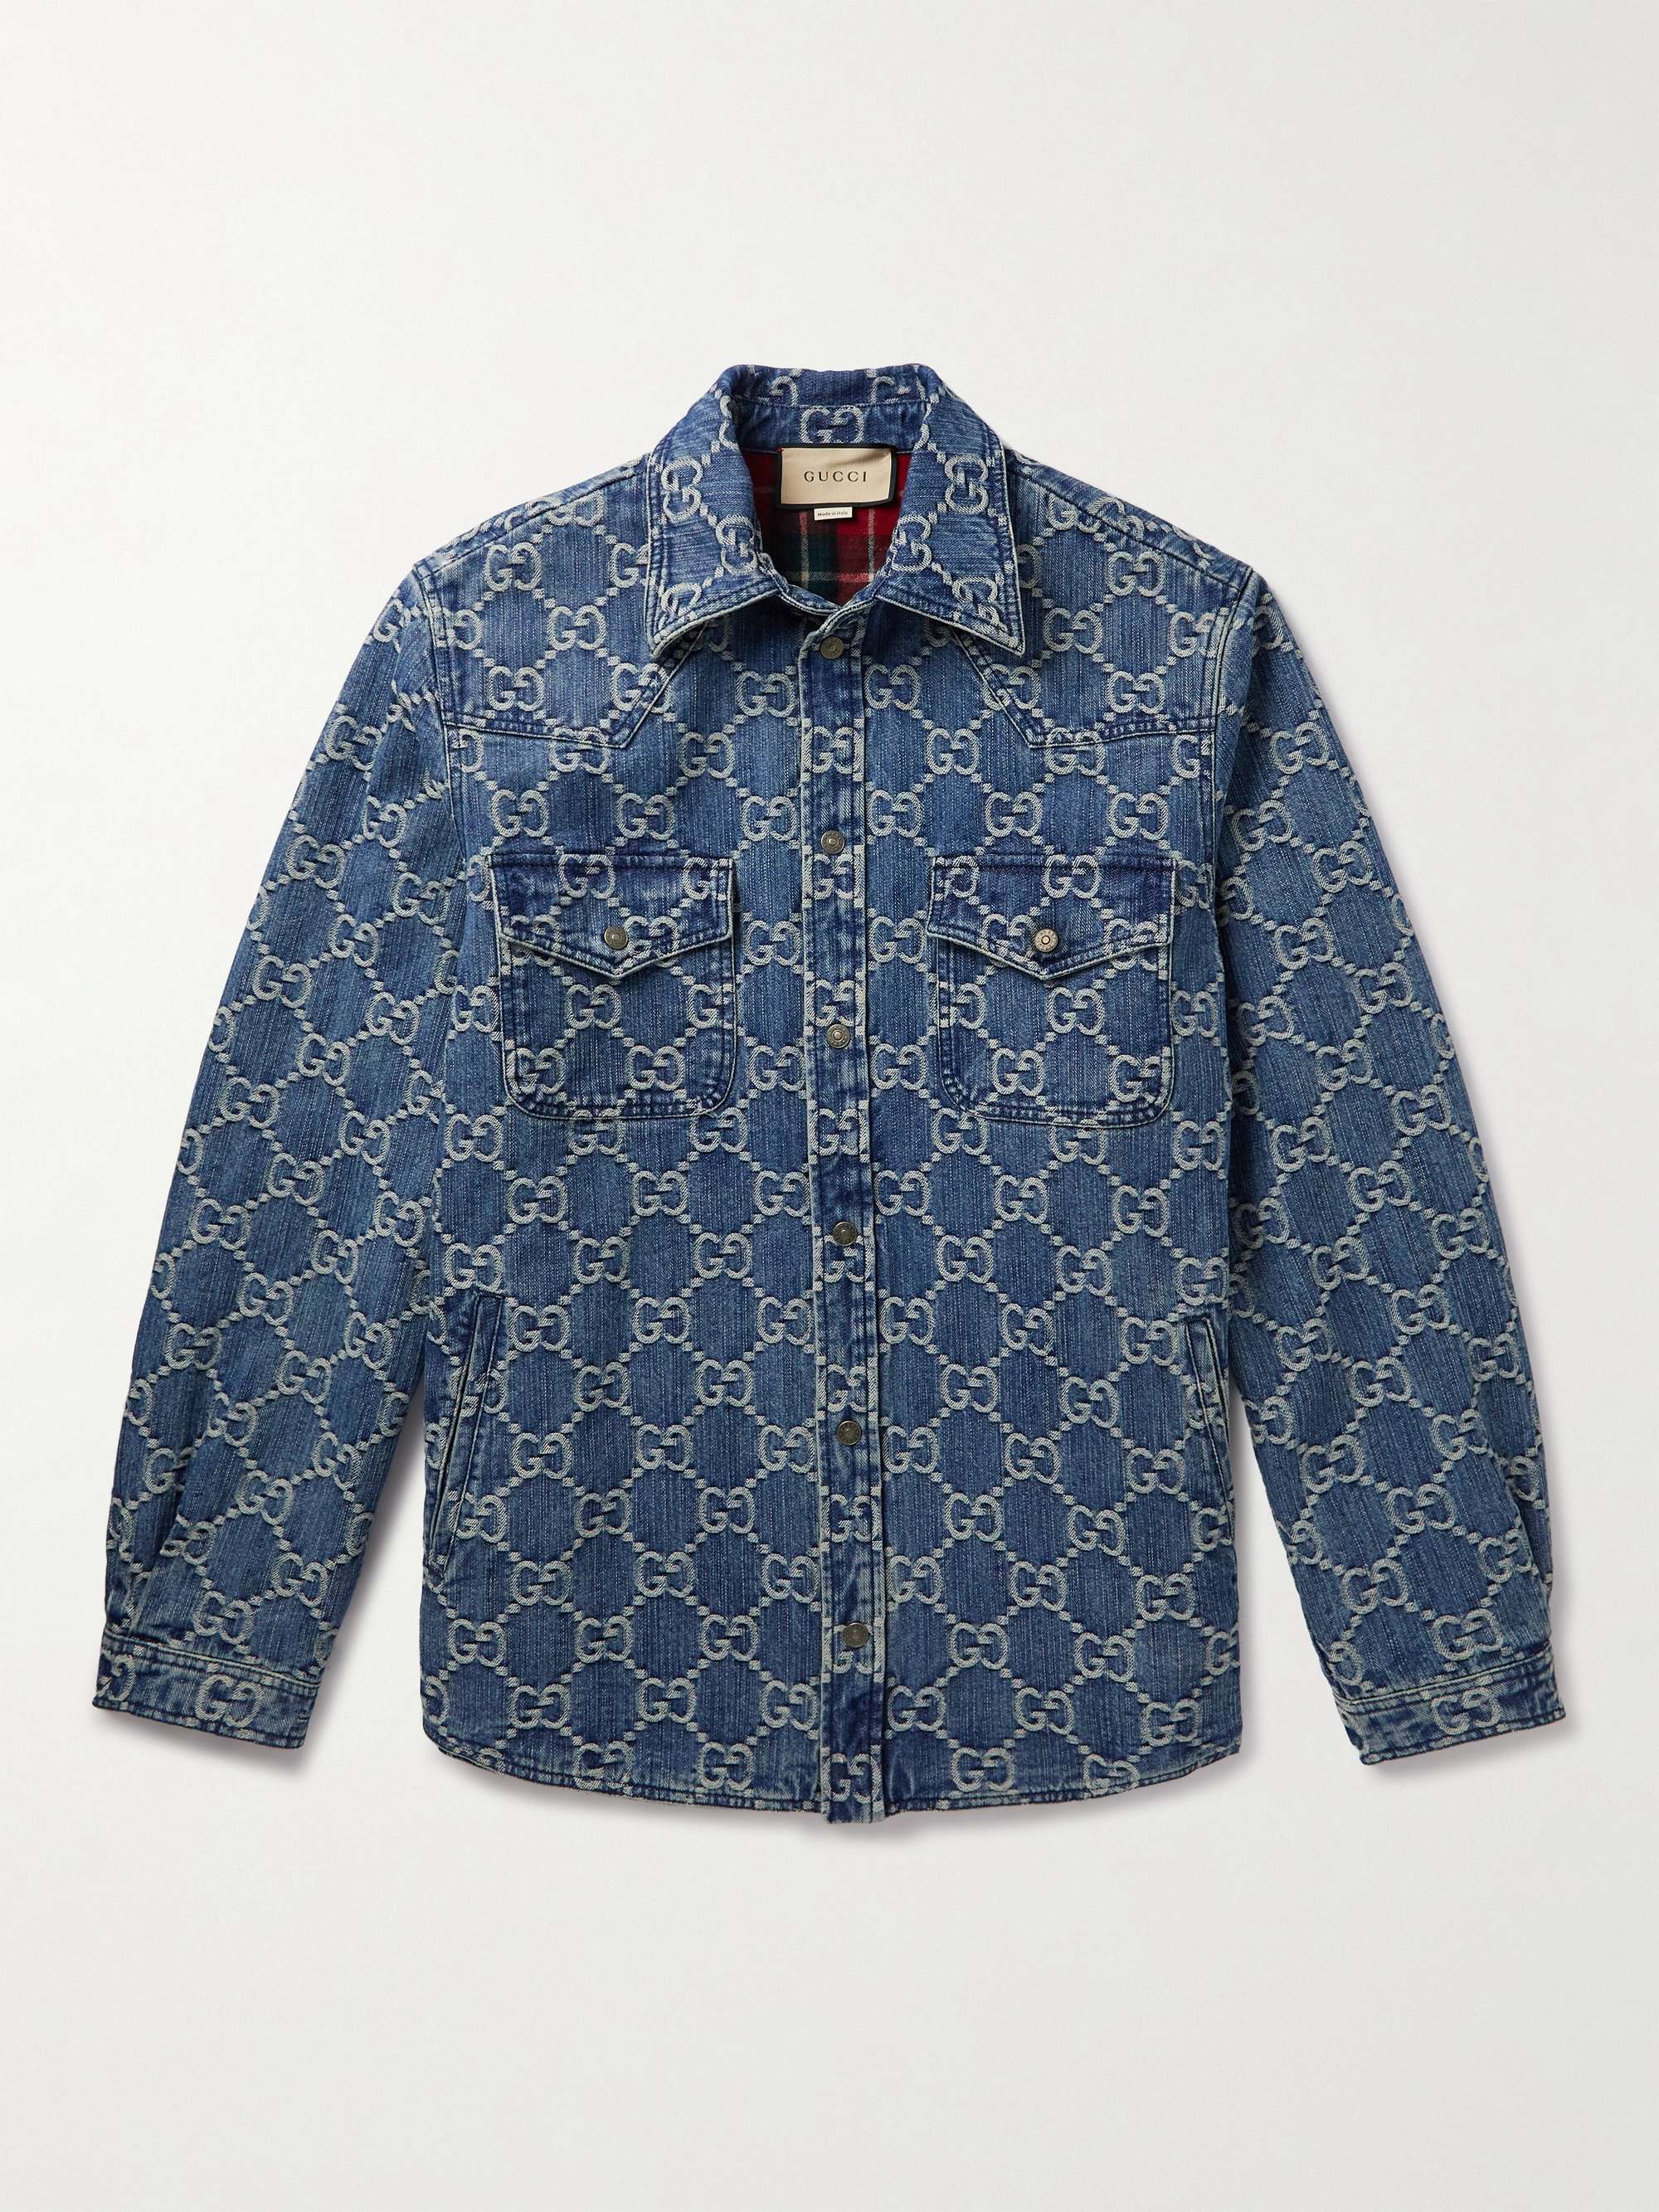 Gucci Men's GG Jacquard Denim Jacket - Blue - Casual Jackets